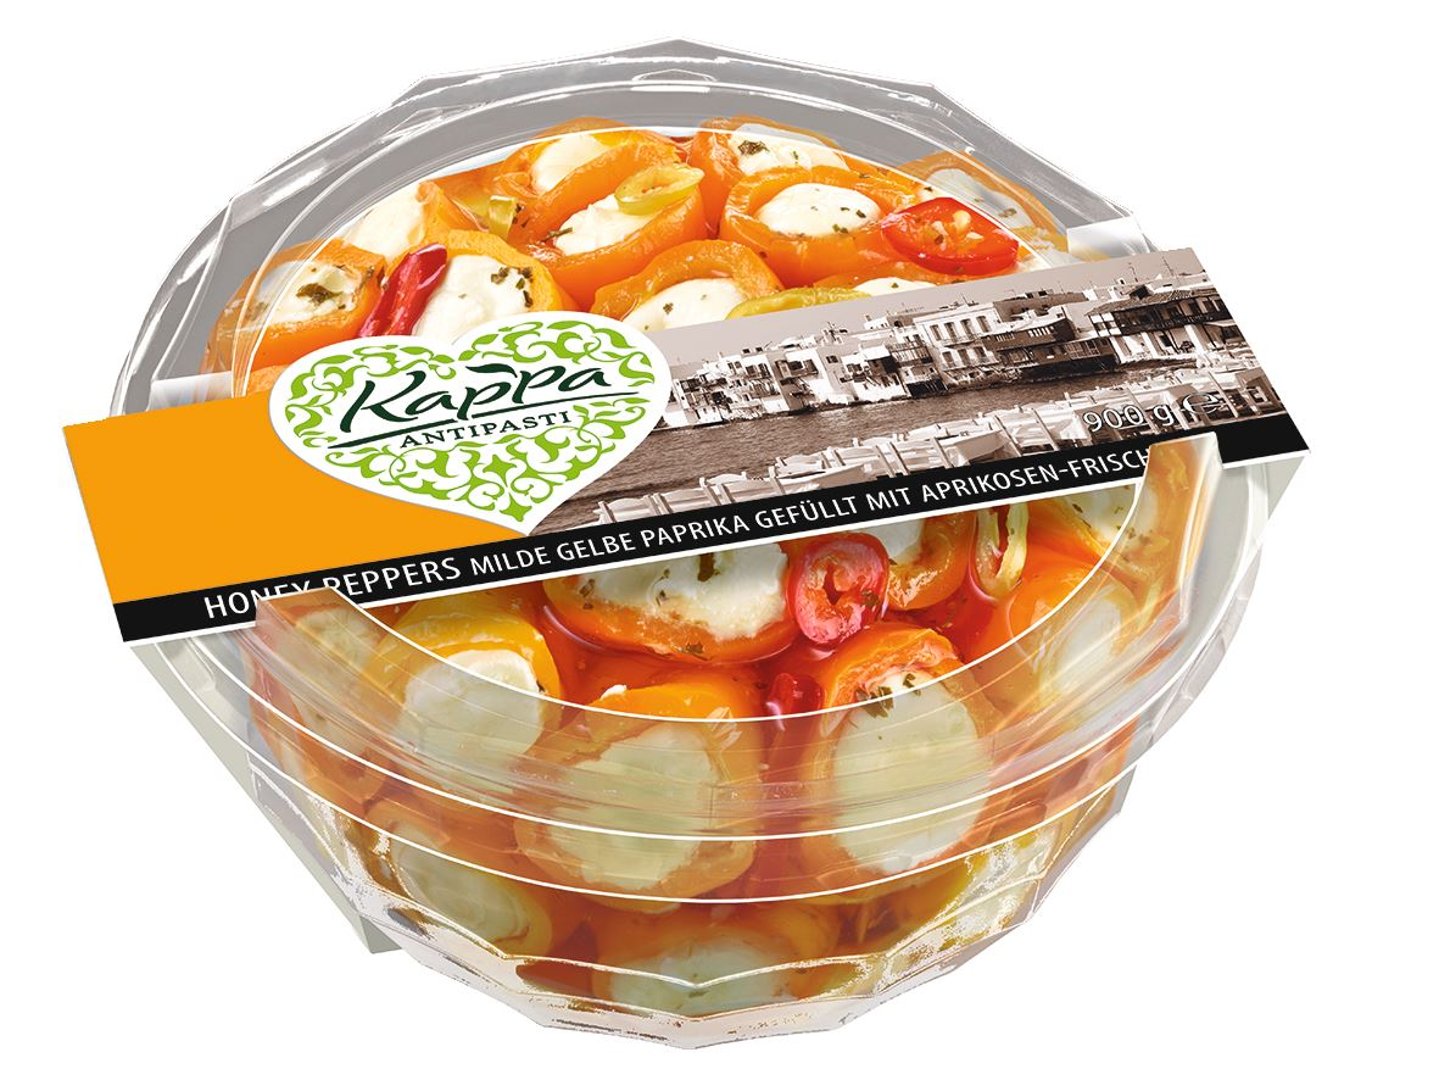 Kappa - Peppers gefüllt Honey Frischkäse gekühlt - 900 g Packung